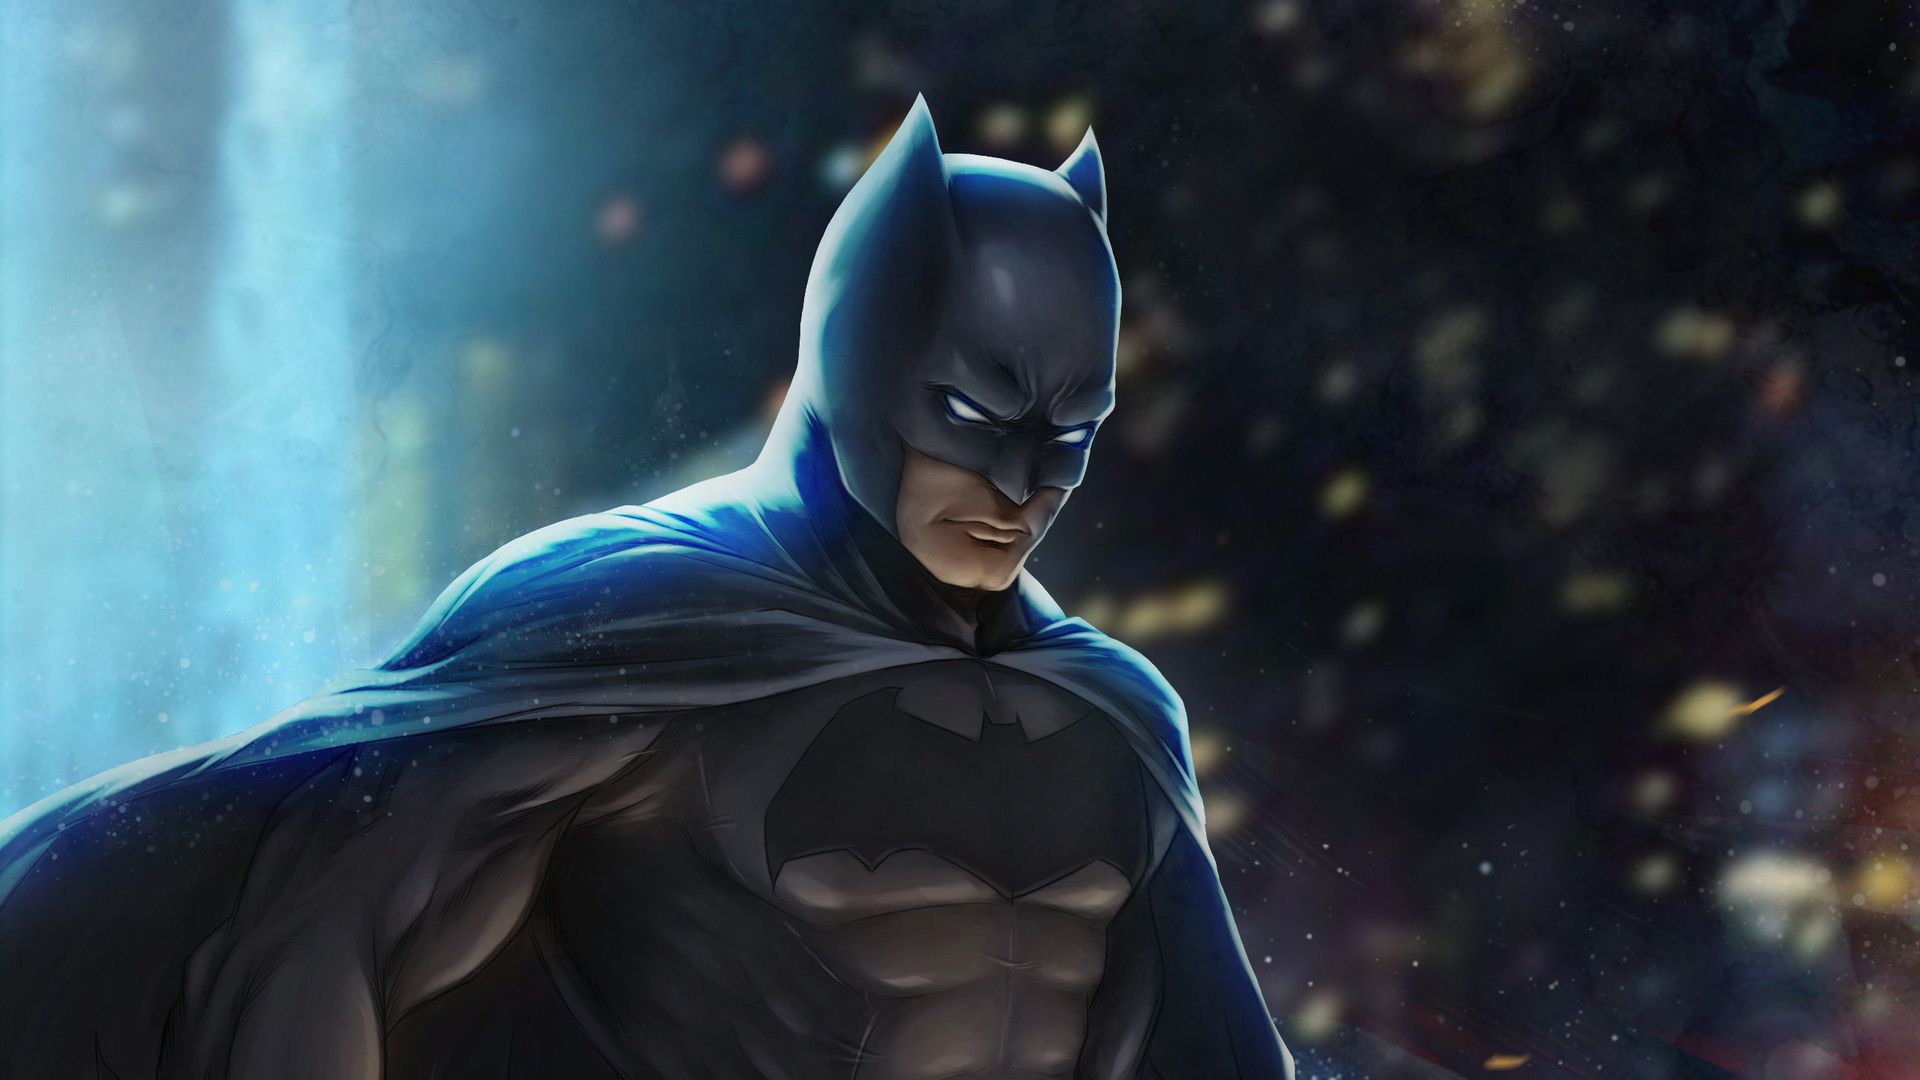 Batman New Fan Art, HD Superheroes, 4k Wallpaper, Image, Background, Photo and Picture